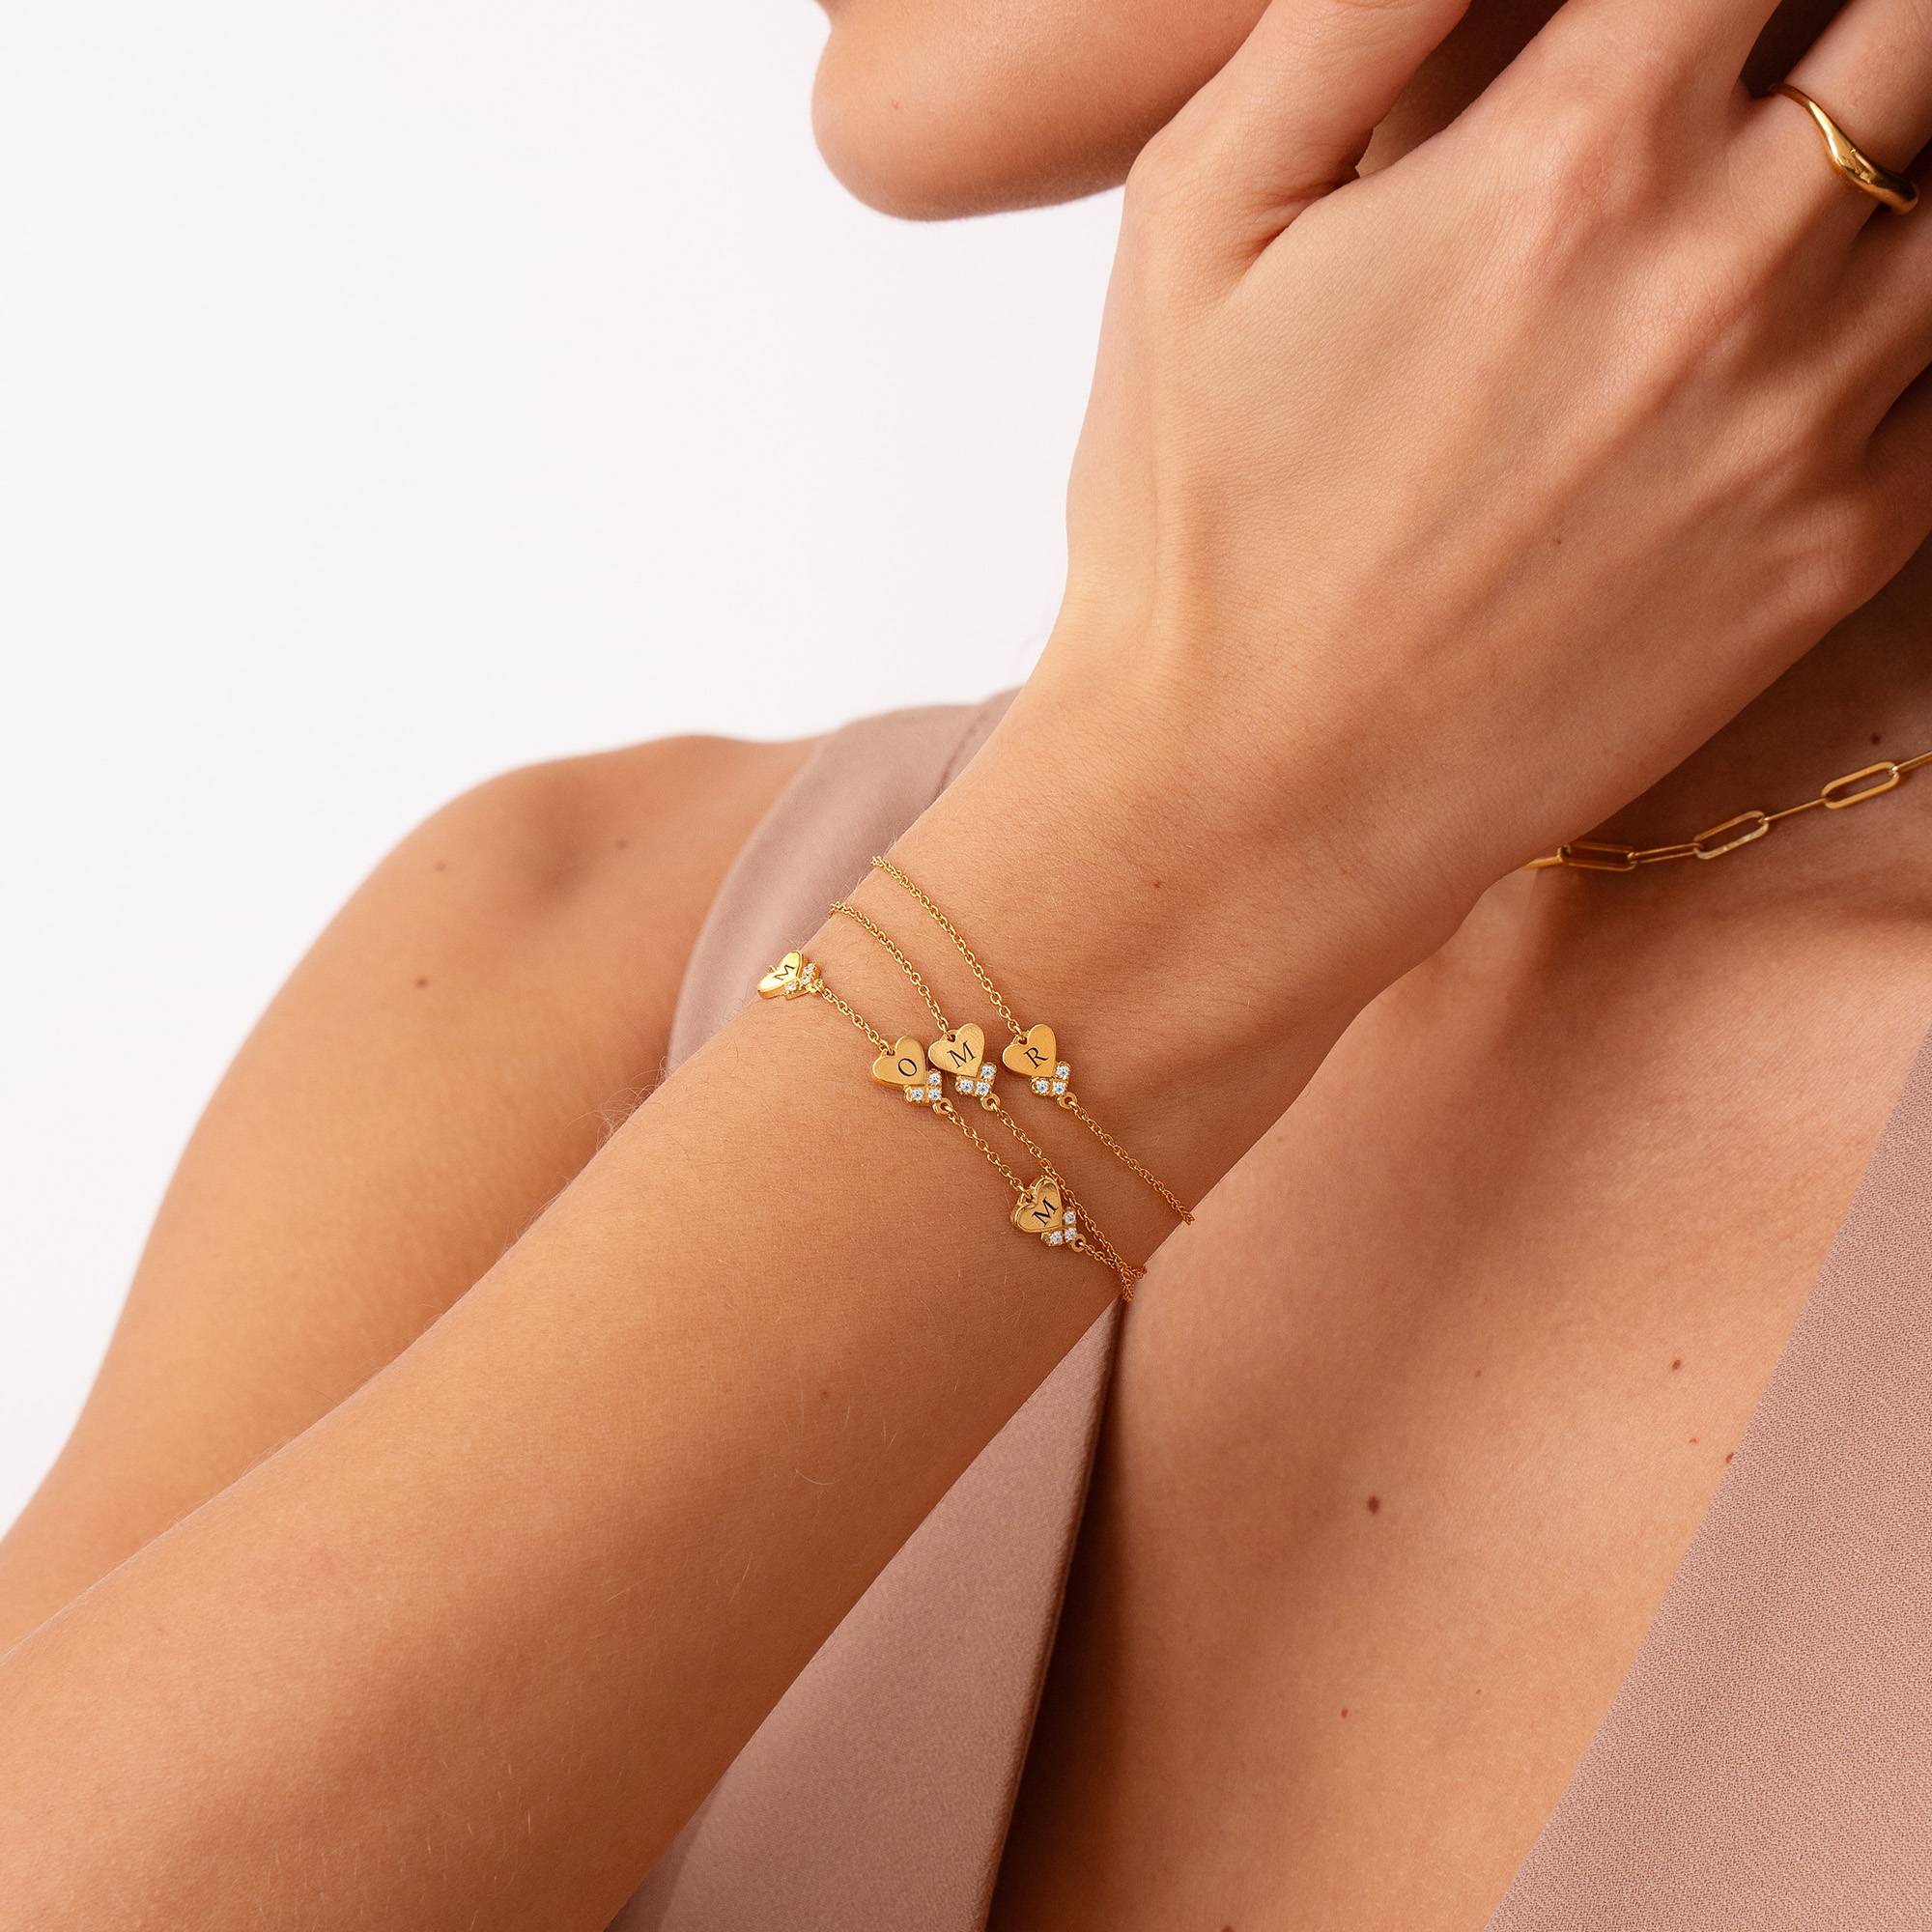 Dakota Herz Initial Armband mit Diamanten - 750er Gold-Vermeil-3 Produktfoto